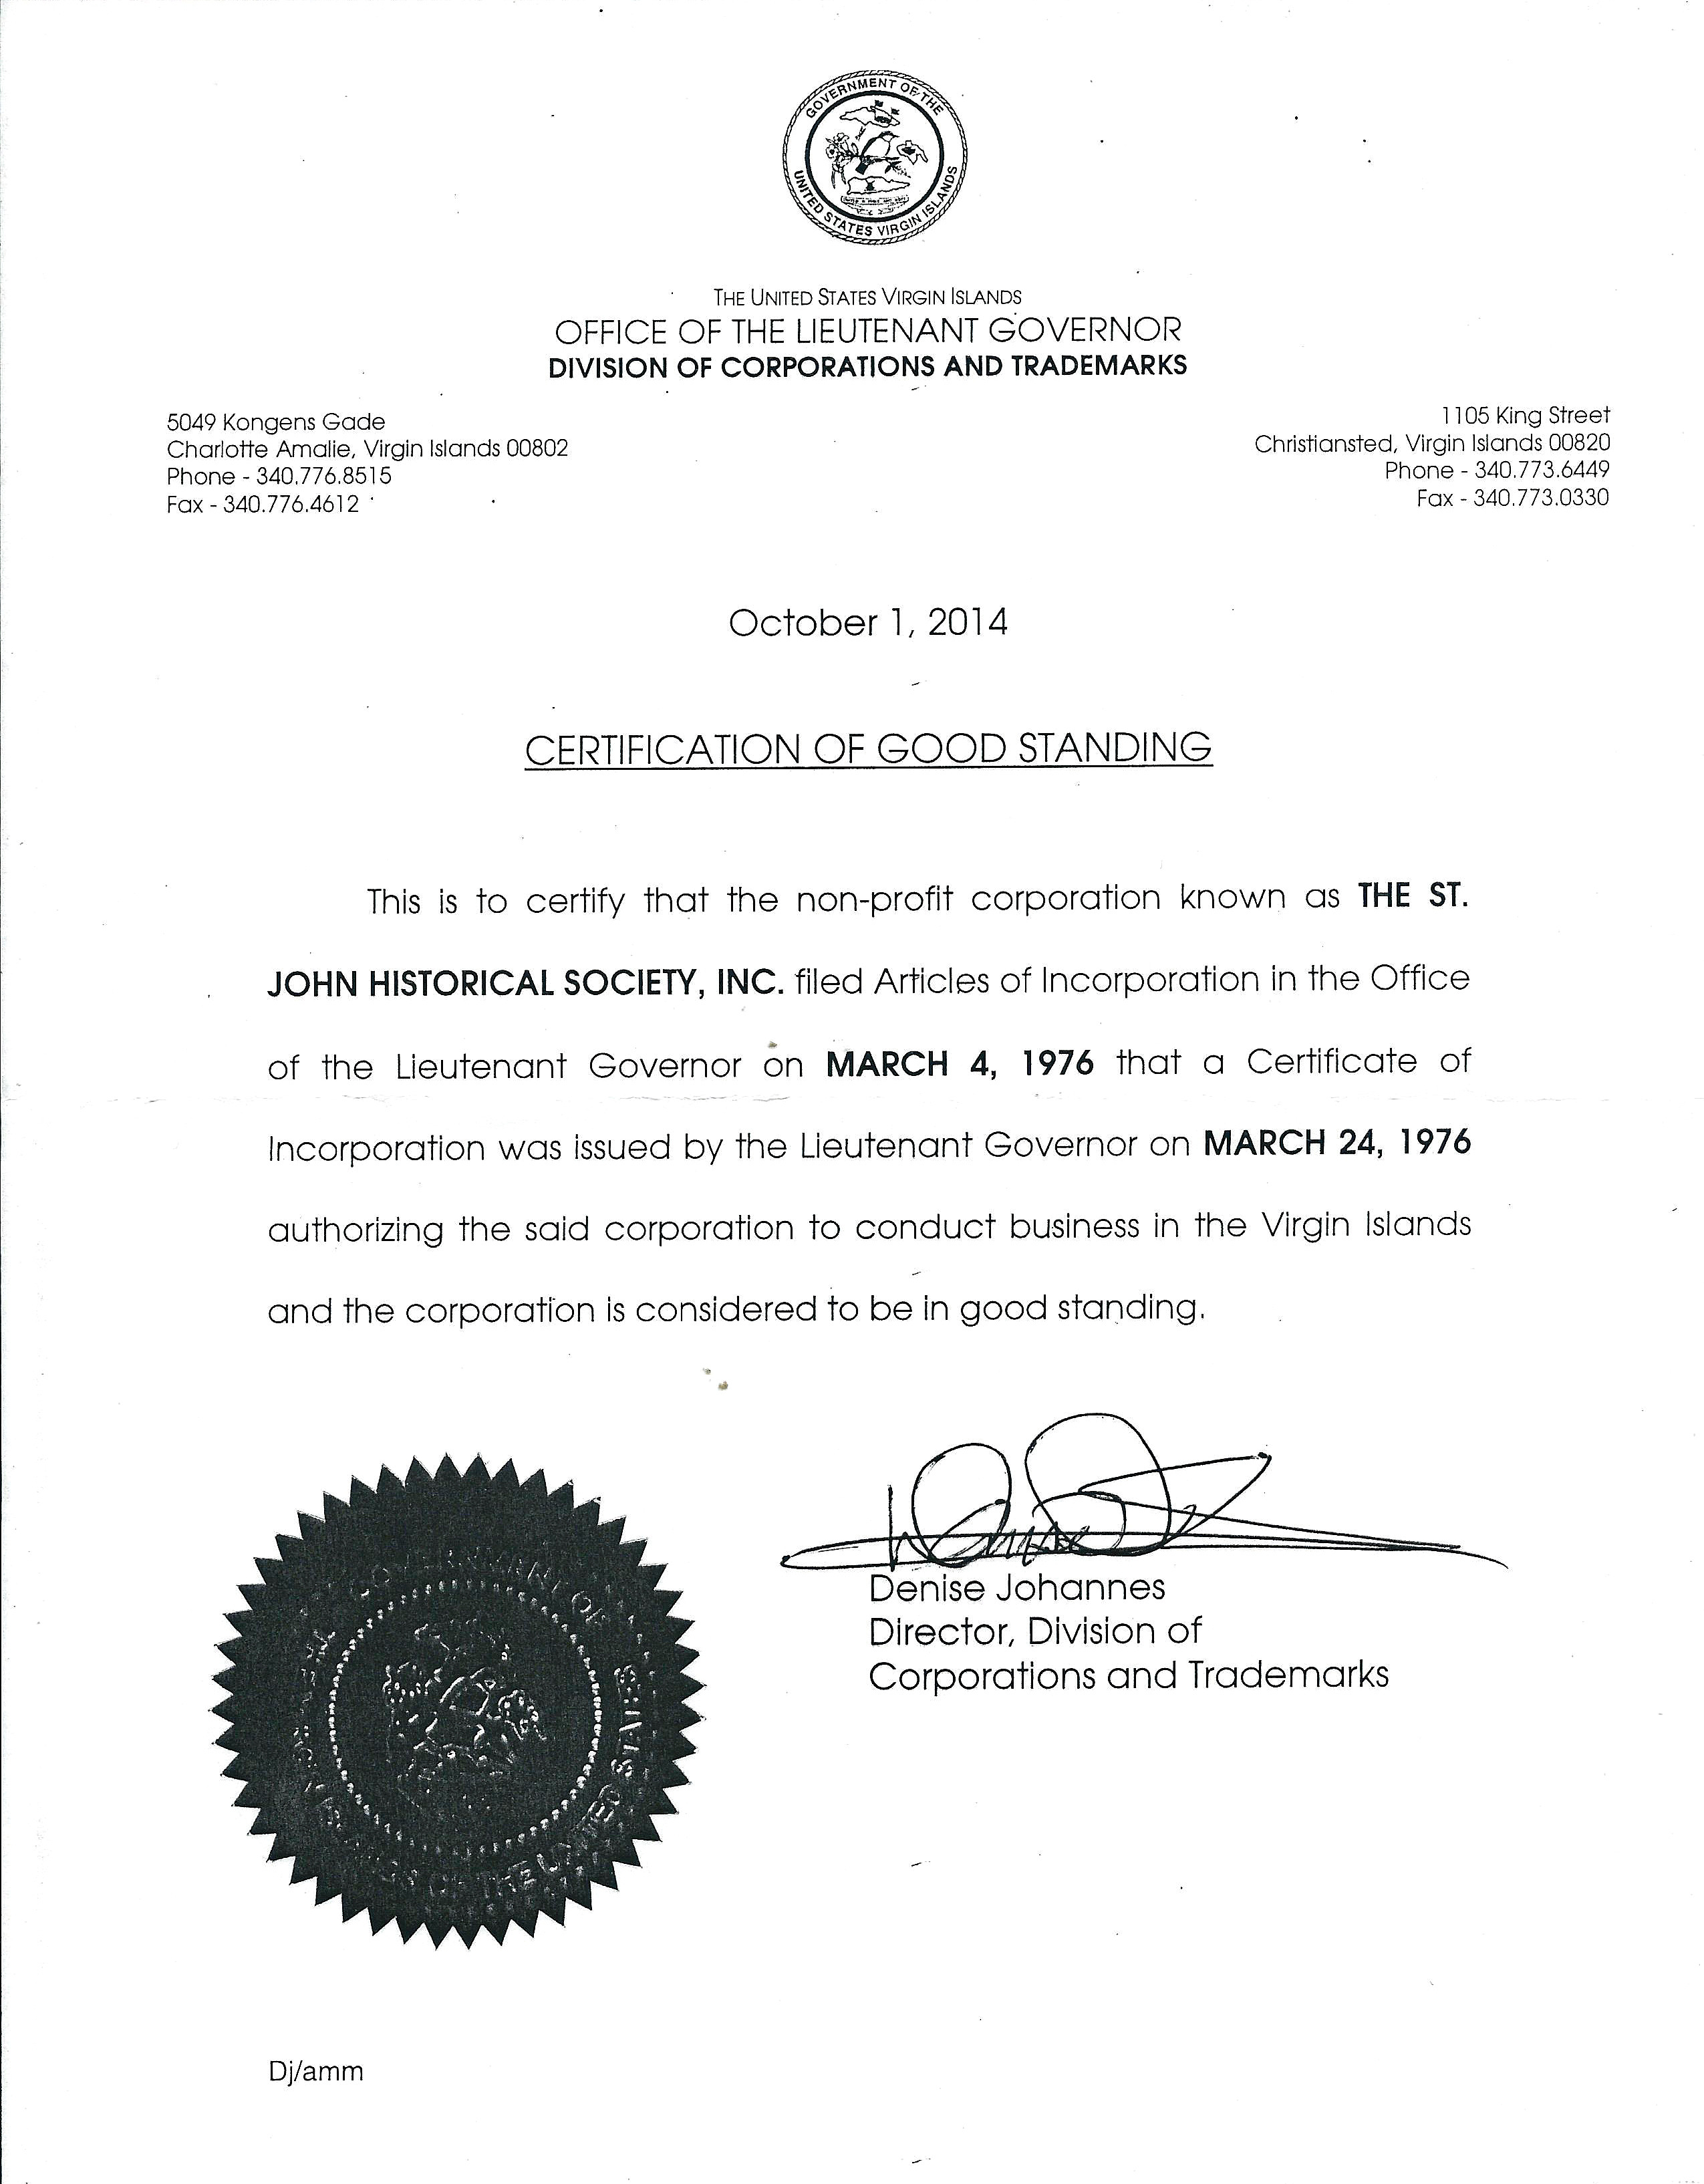 certificate-of-good-standing-oct-1-2014-st-john-historical-society